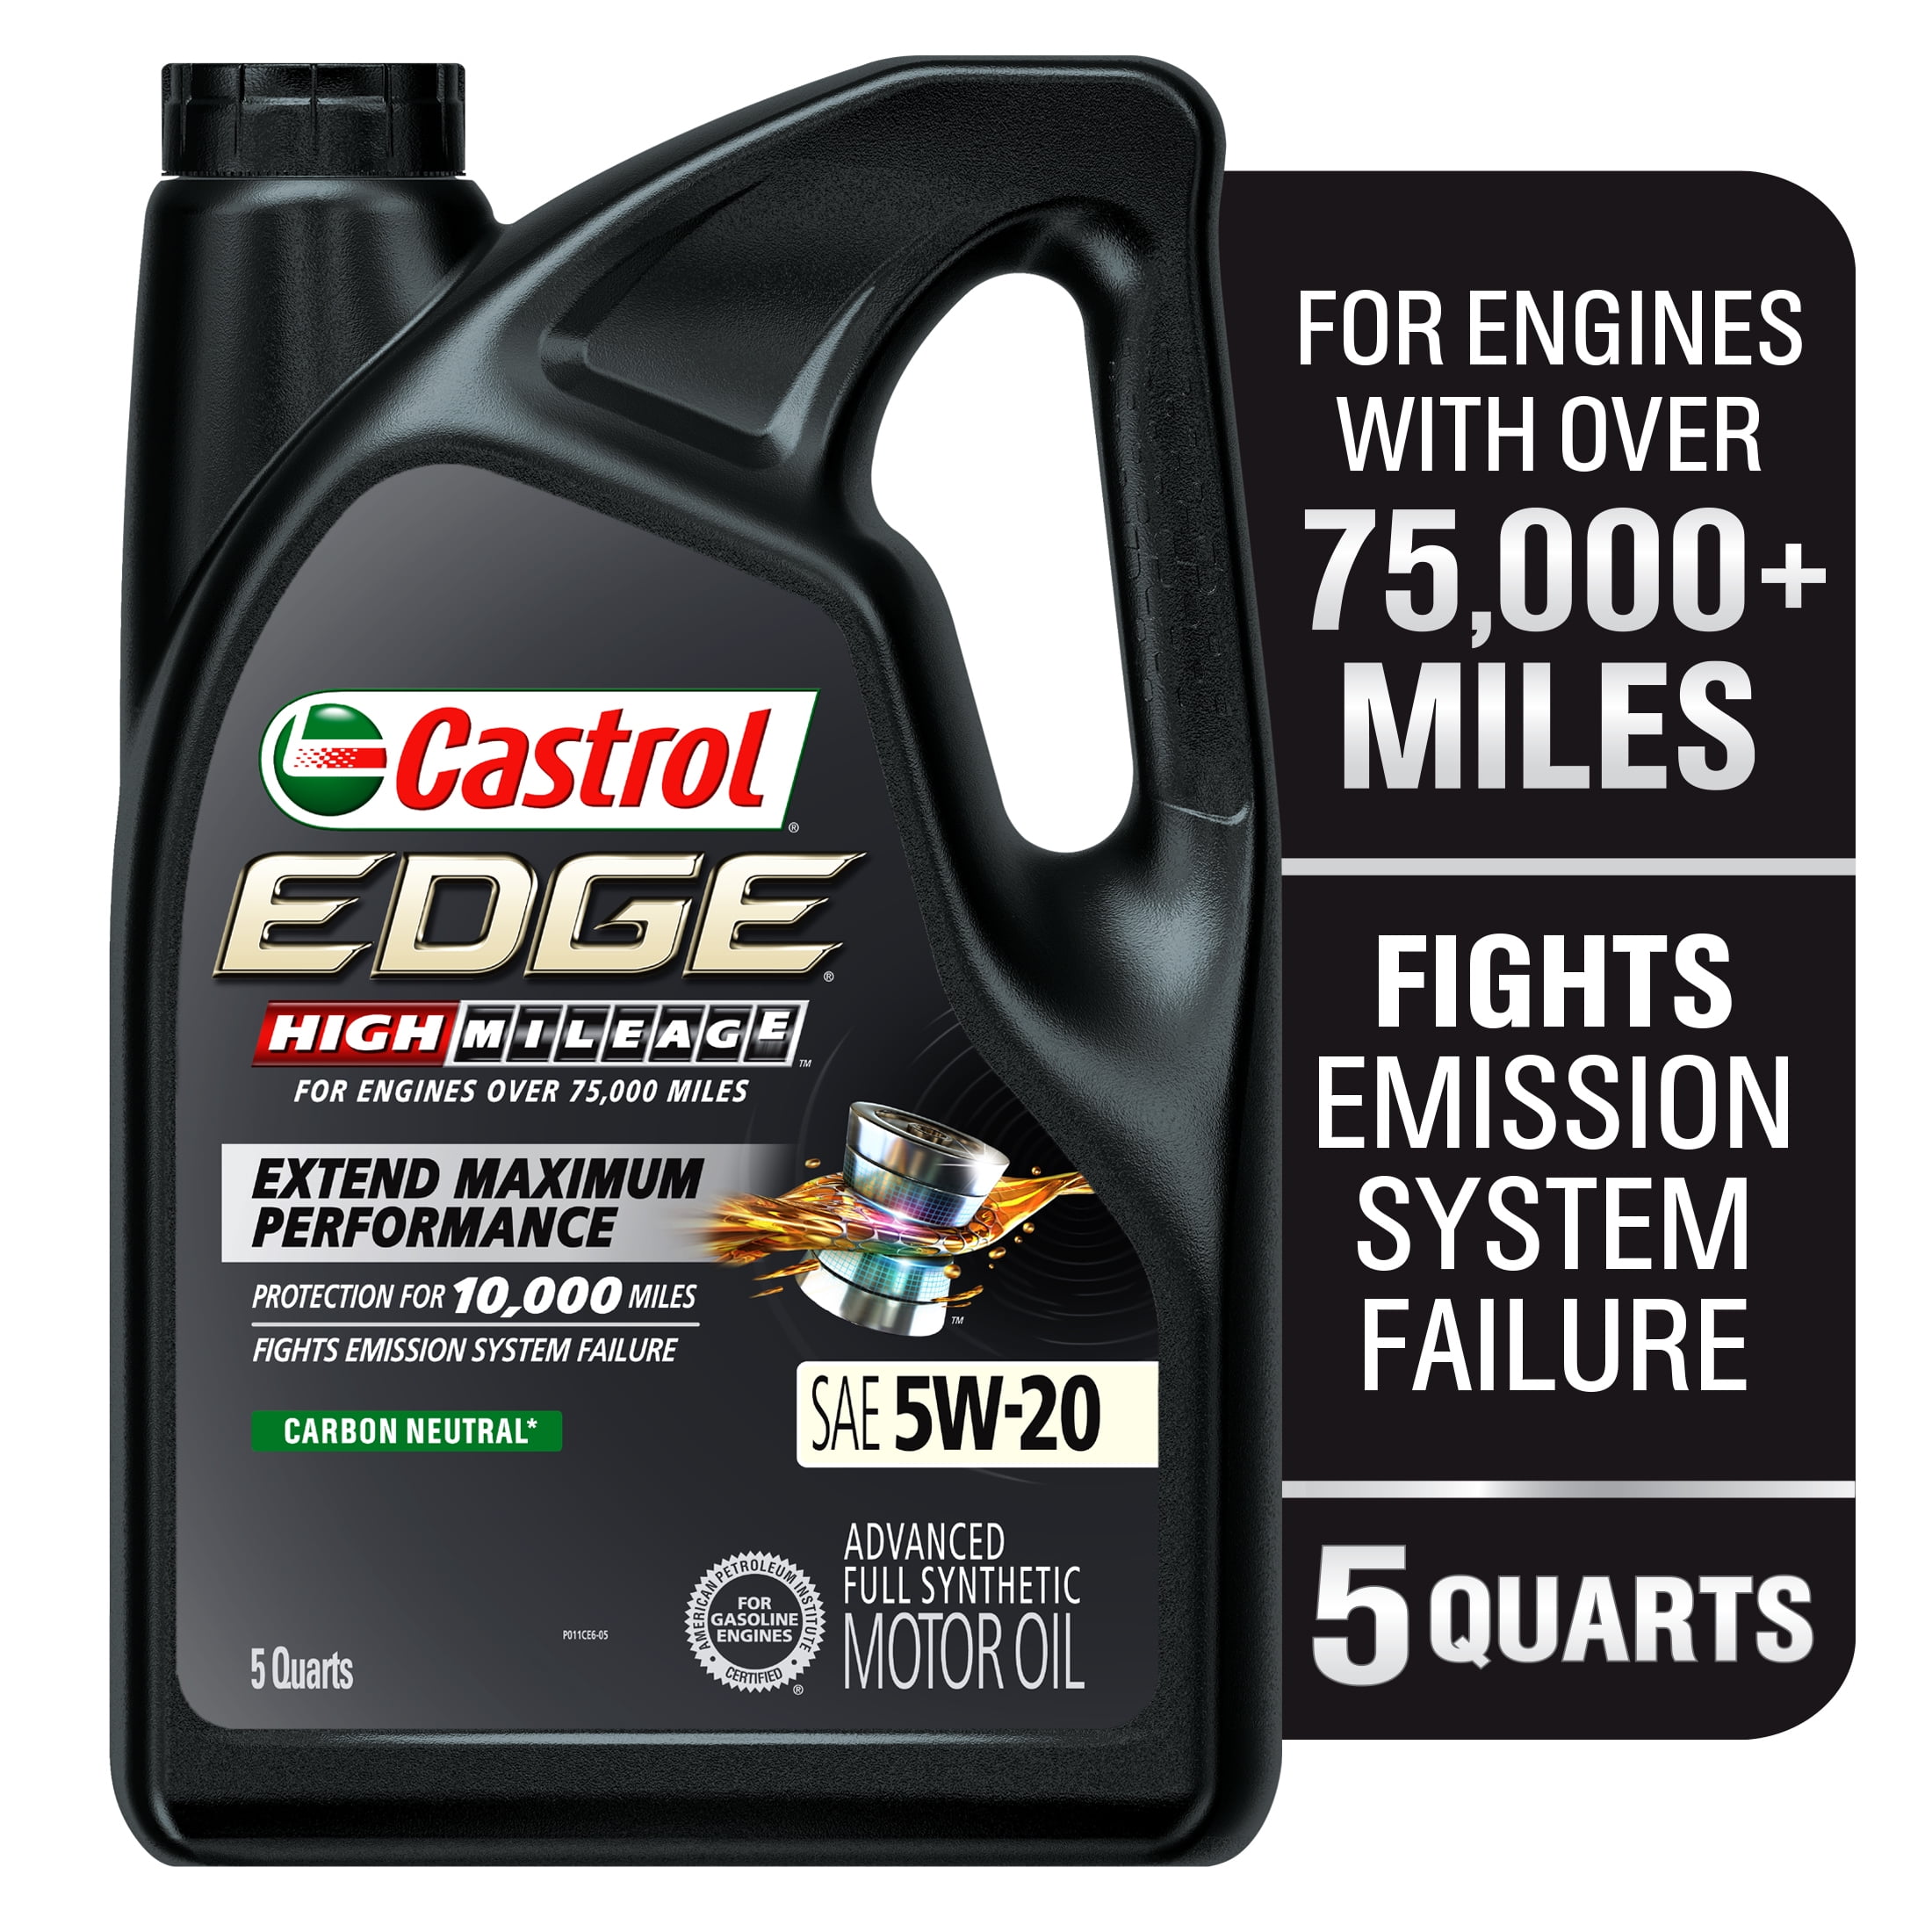 Castrol Edge High Mileage 5W20 Advanced Full Synthetic Motor Oil, 5